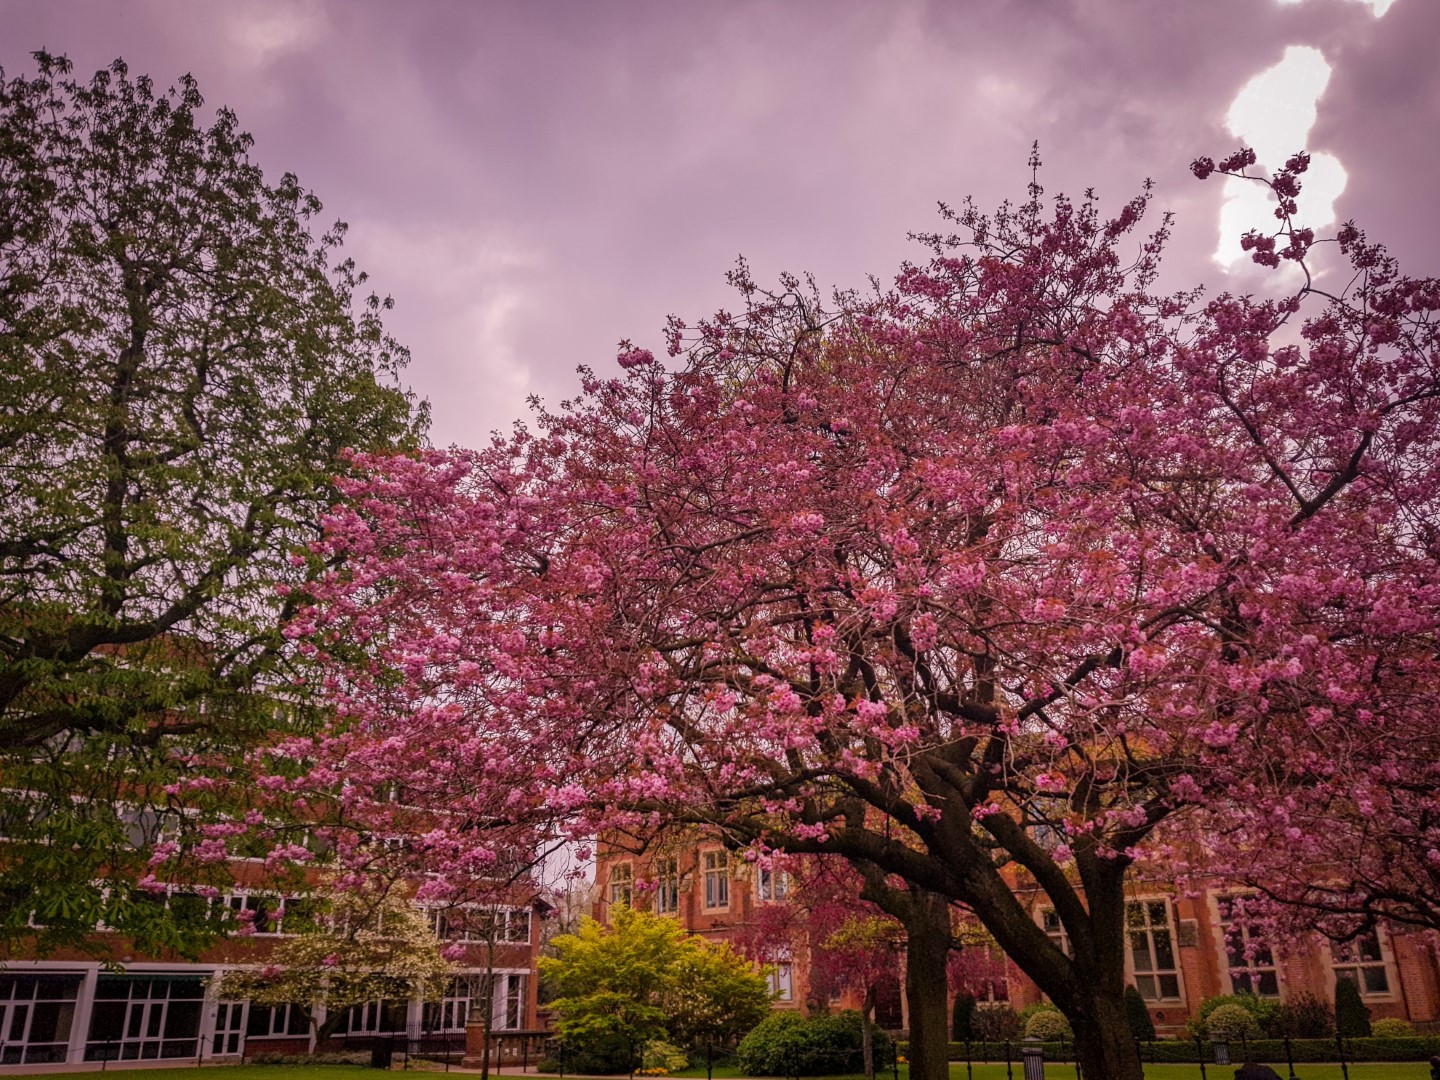 Cheery blossom tree at Queens University, Northern Ireland